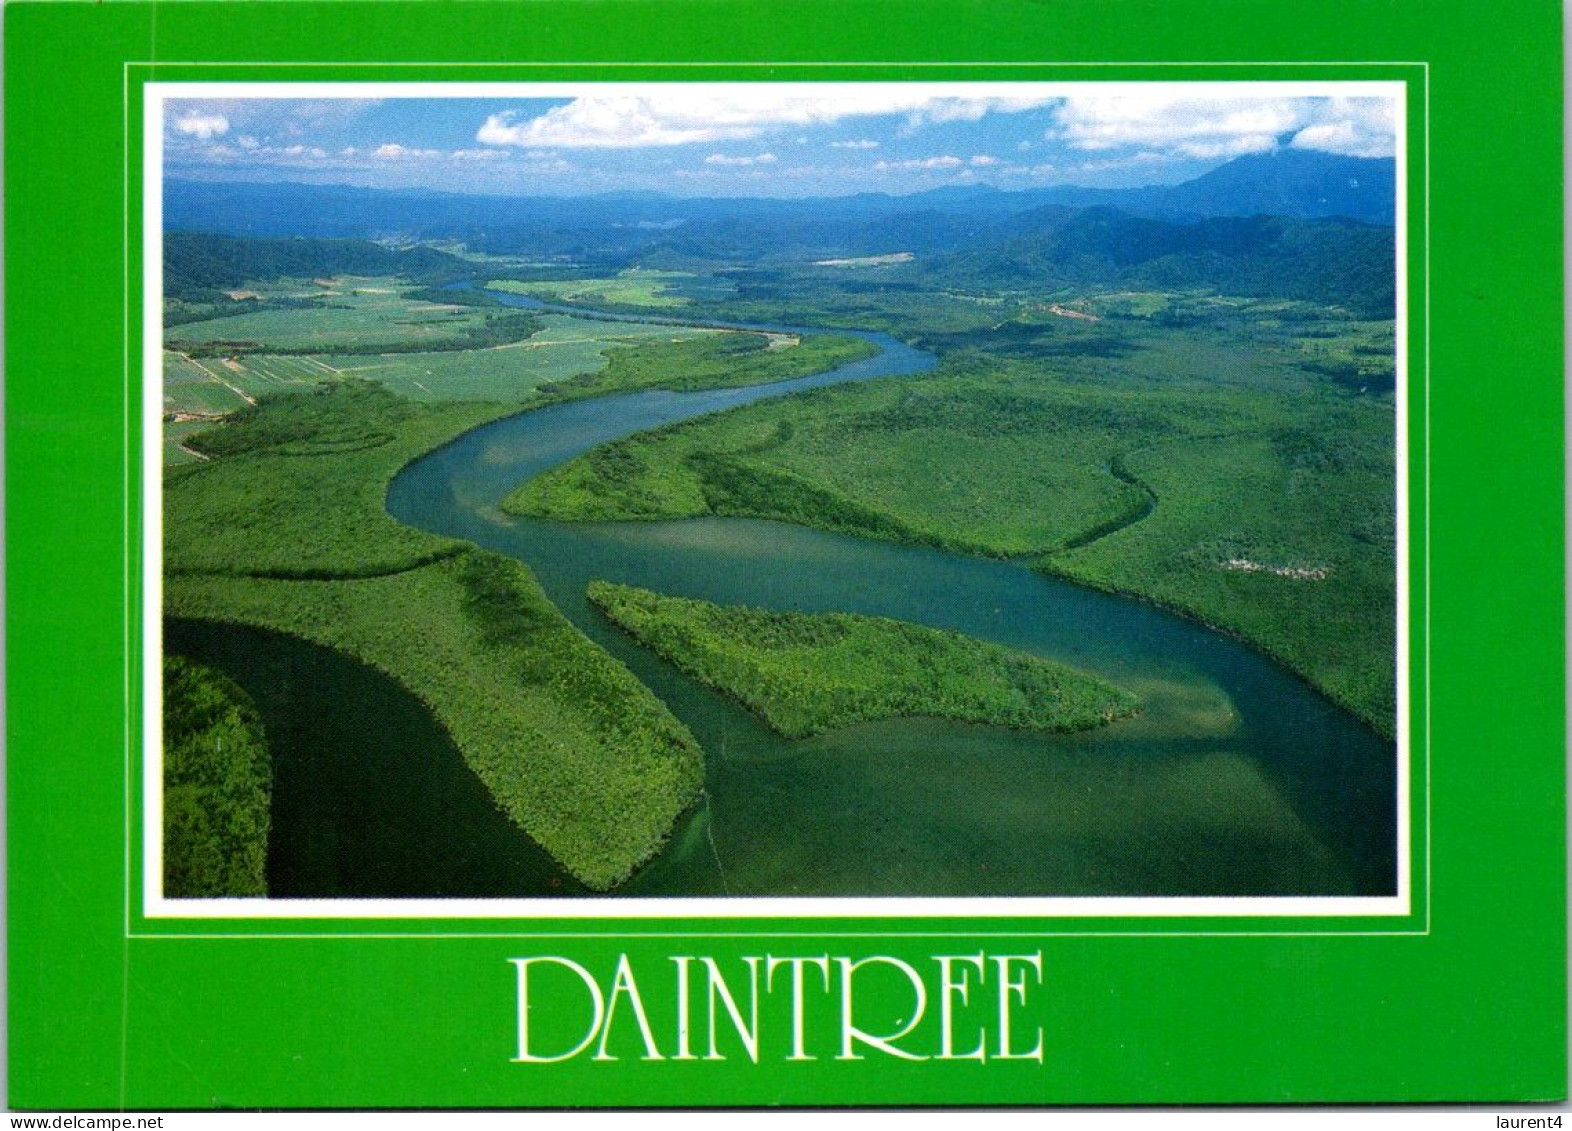 1-3-2025 (1 Y 35) Australia - QLD - Daintree (rainforest) - Far North Queensland